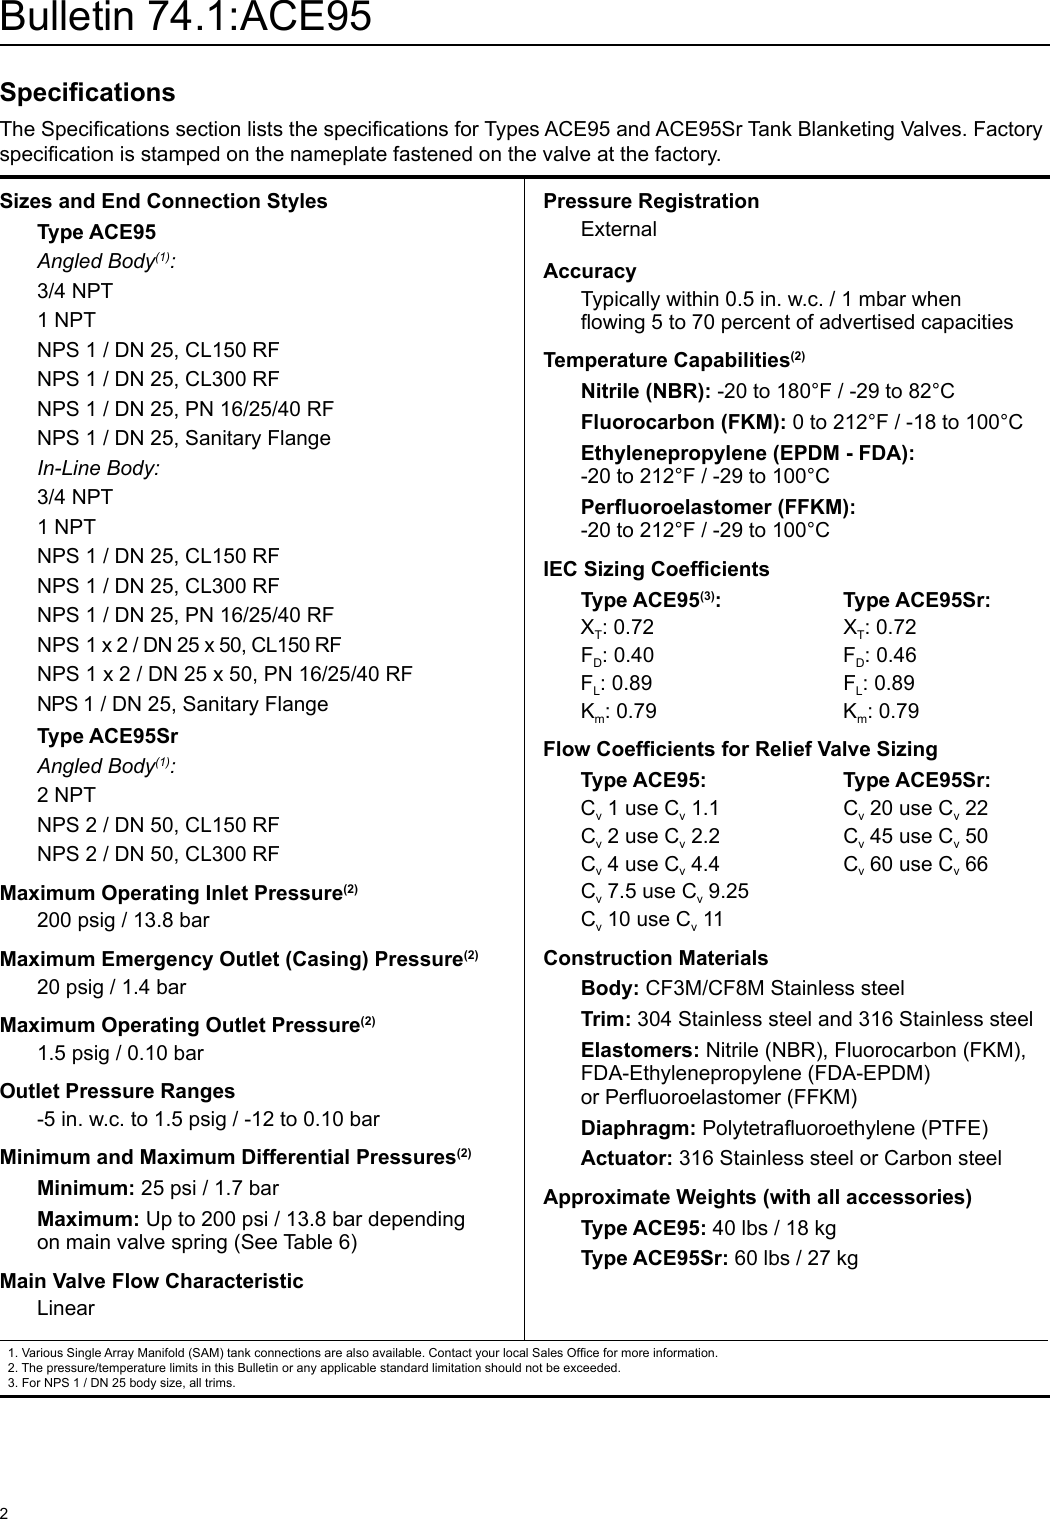 Page 2 of 12 - Emerson Emerson-Ace95-Vapor-Saver-Tank-Blanketing-Valve-Data-Sheet-  Emerson-ace95-vapor-saver-tank-blanketing-valve-data-sheet